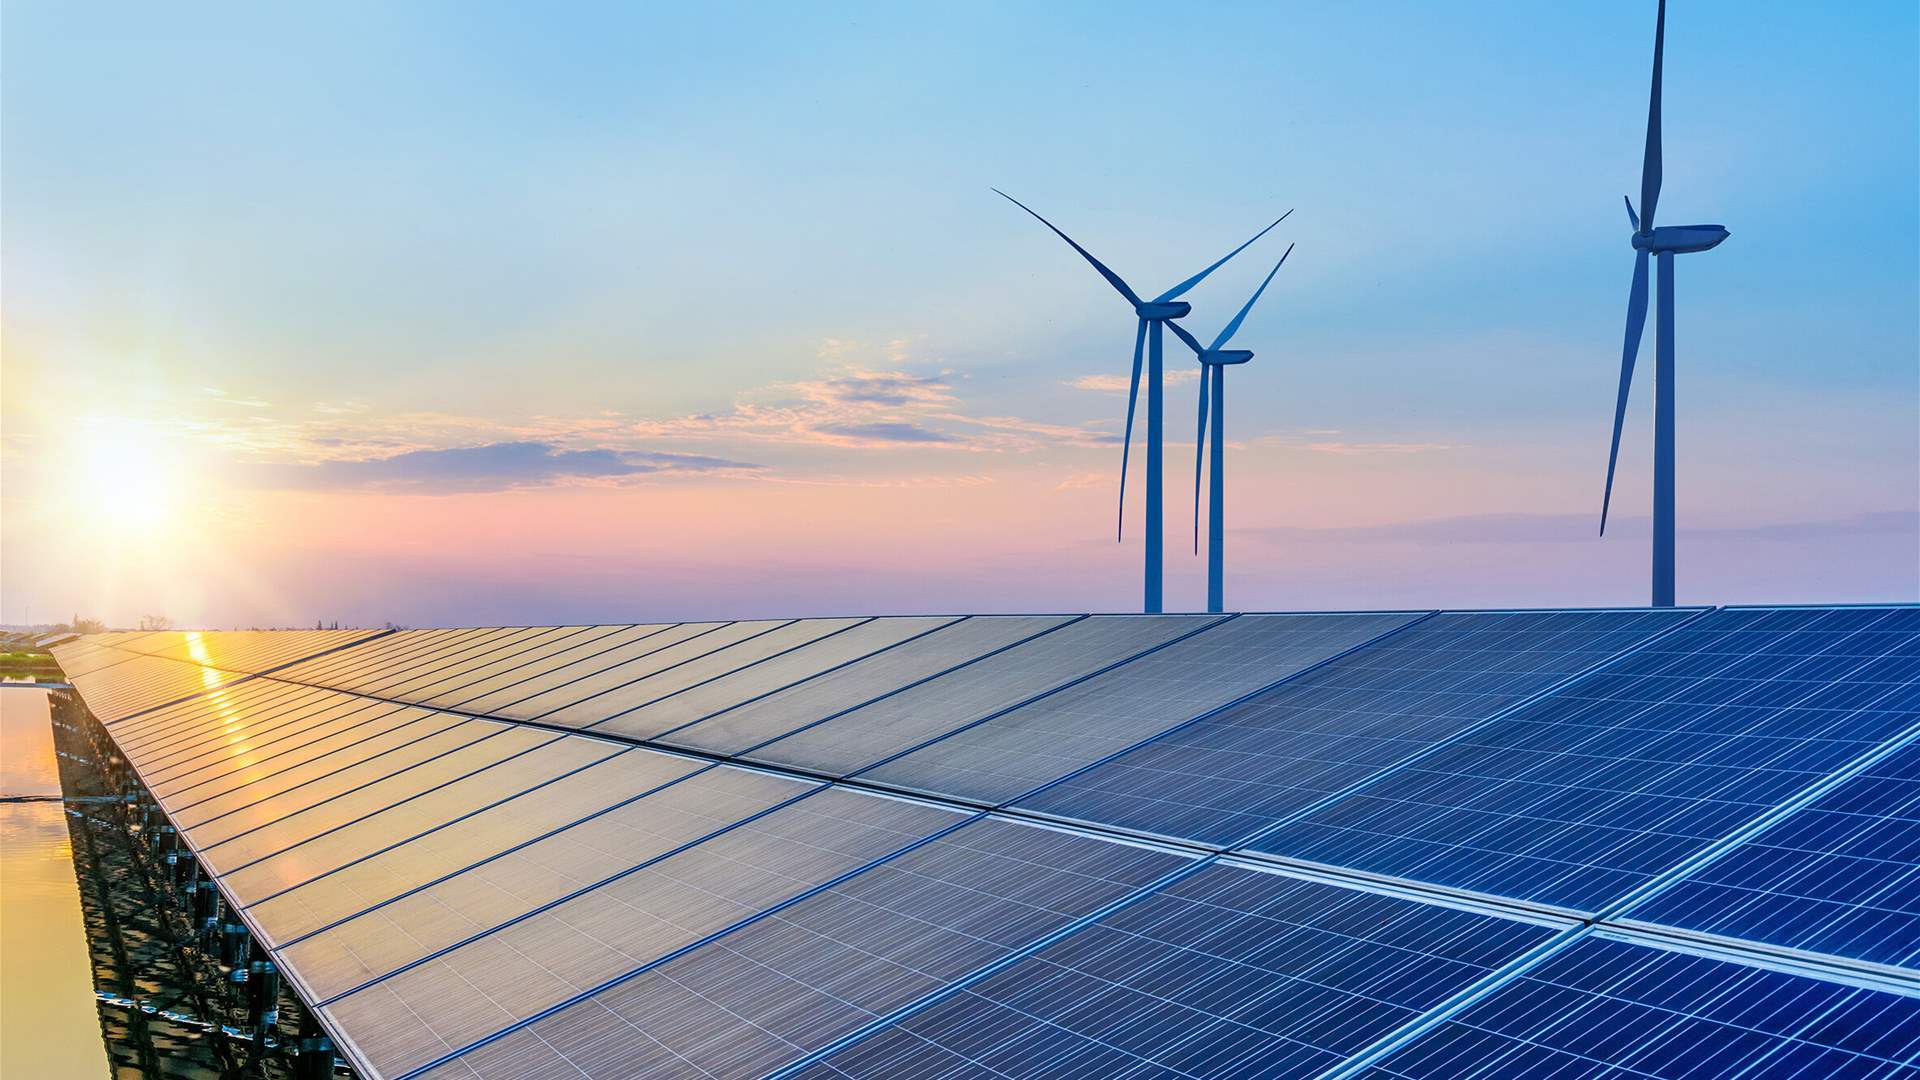 Lebanon boosts renewable energy with new solar power plant